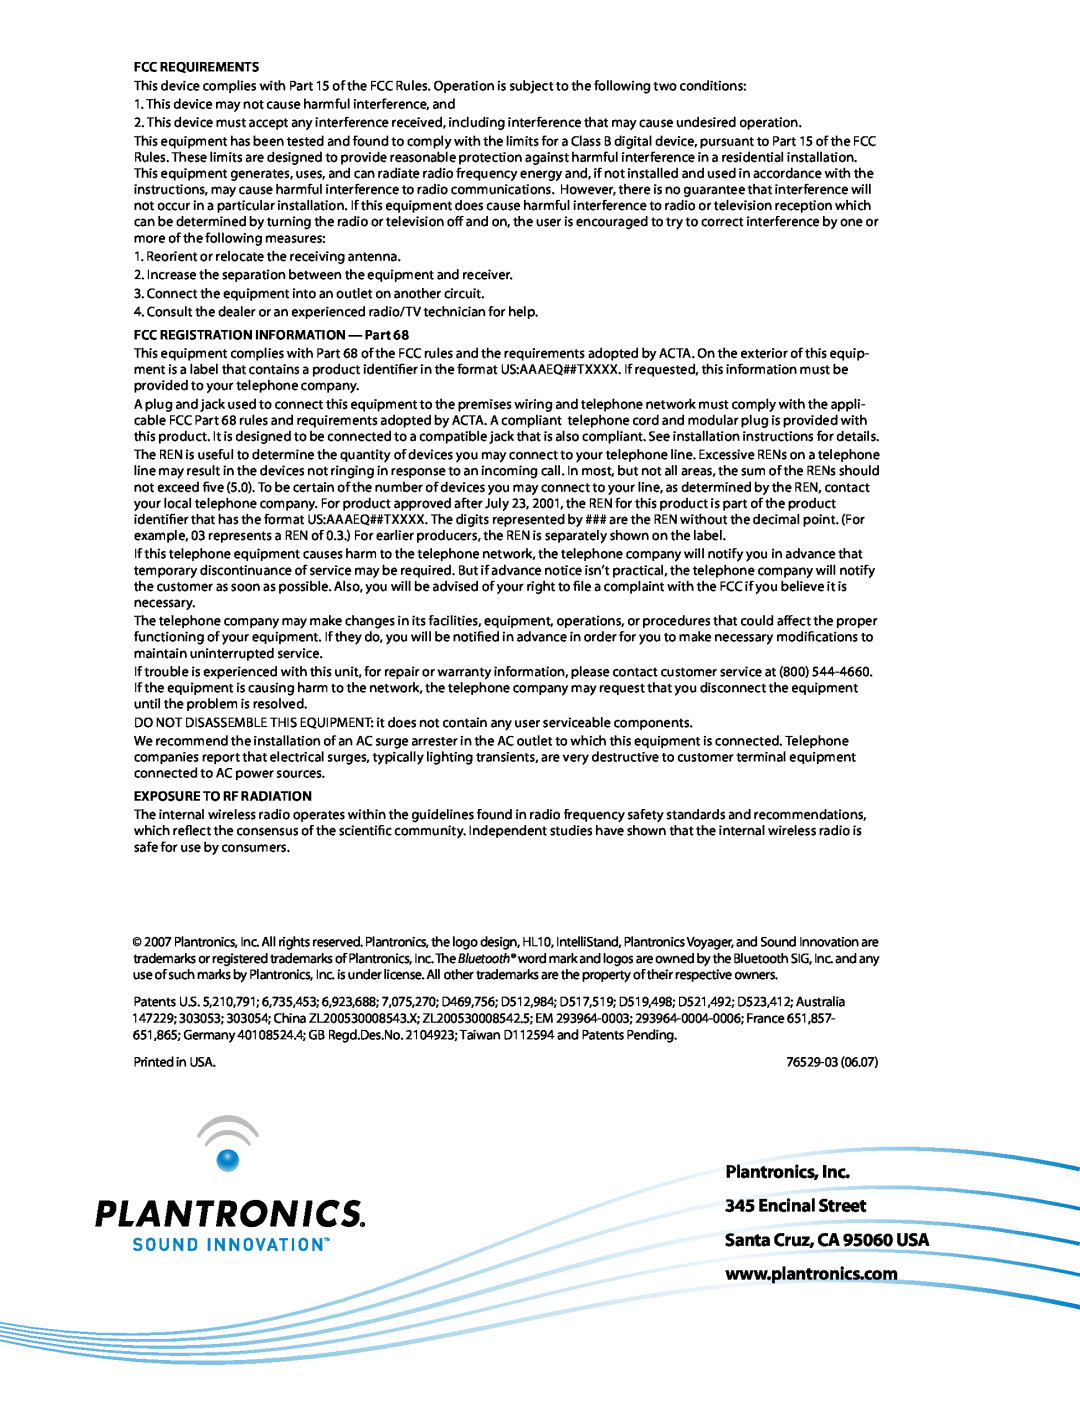 Plantronics 510S Plantronics, Inc 345 Encinal Street Santa Cruz, CA 95060 USA, FCC Requirements, Exposure to RF Radiation 